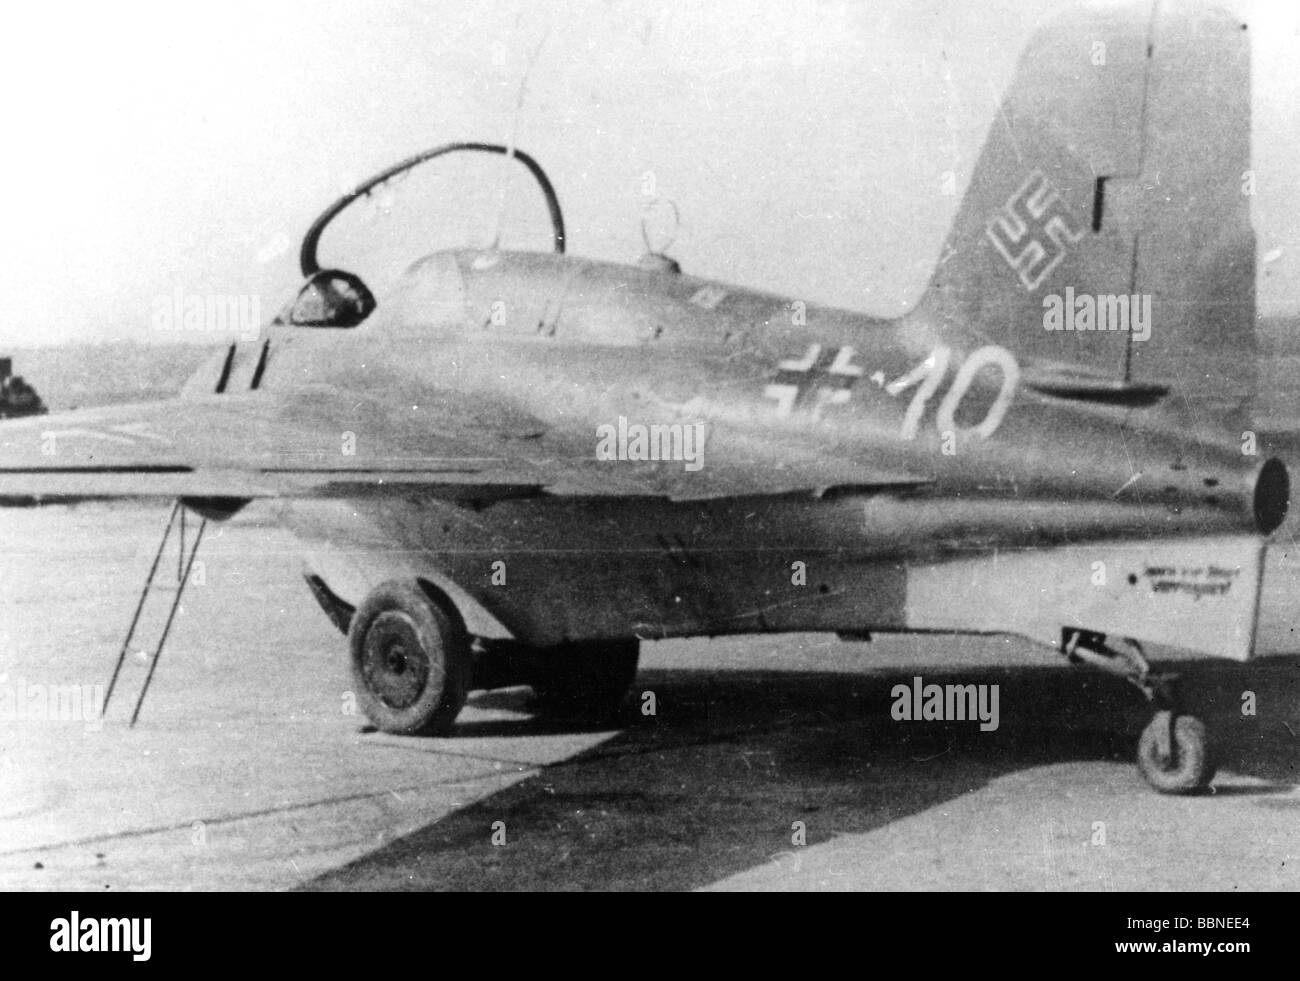 Eventi, Seconda guerra mondiale / seconda guerra mondiale, guerra aerea, aereo, aereo da combattimento tedesco a razzo Messerschmitt Me 163 B 'Komet', circa 1944, Foto Stock